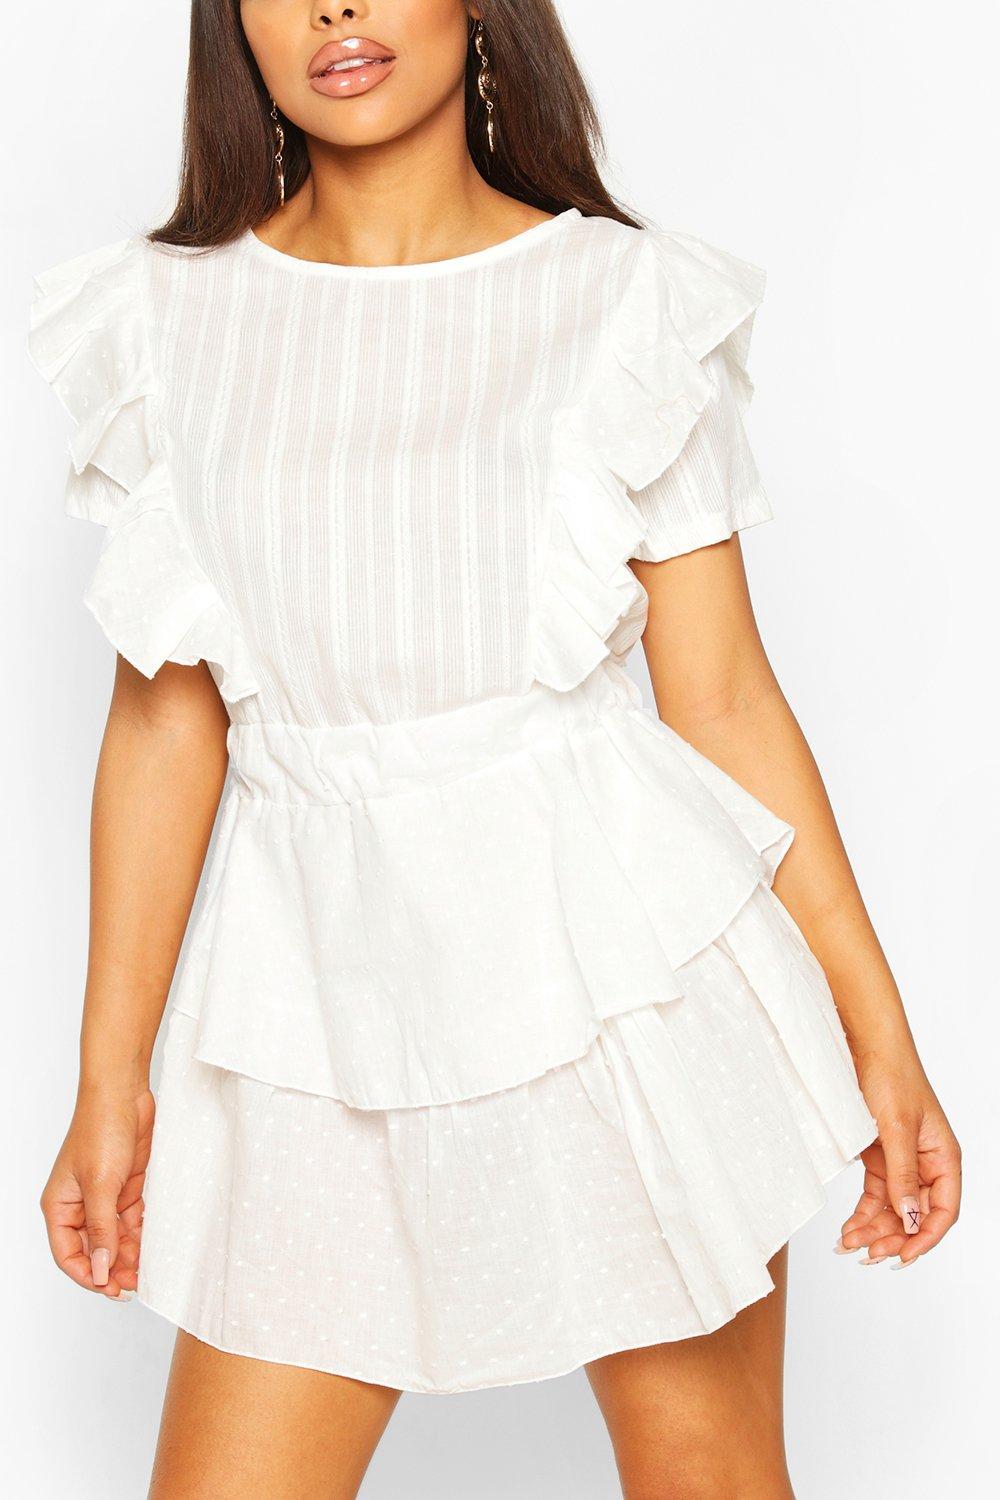 white petite dress uk